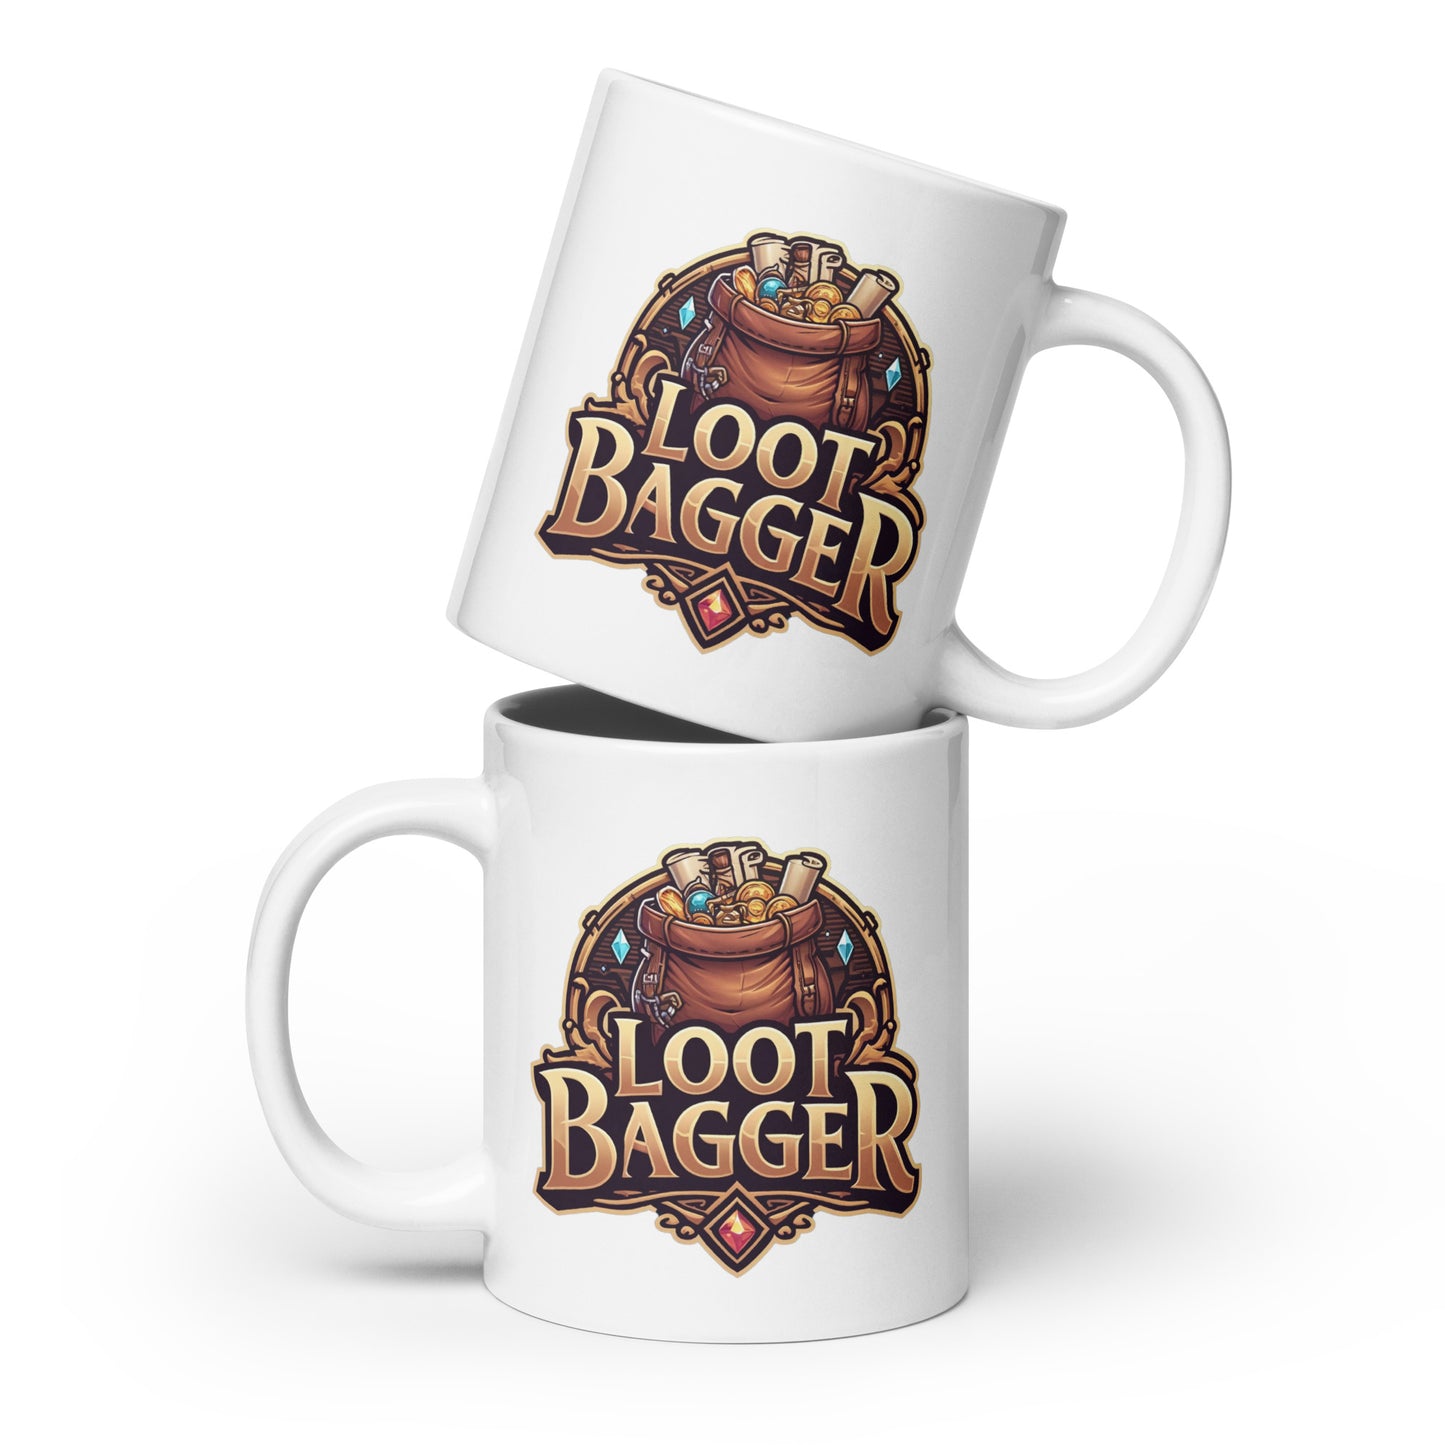 Loot Bagger Mug